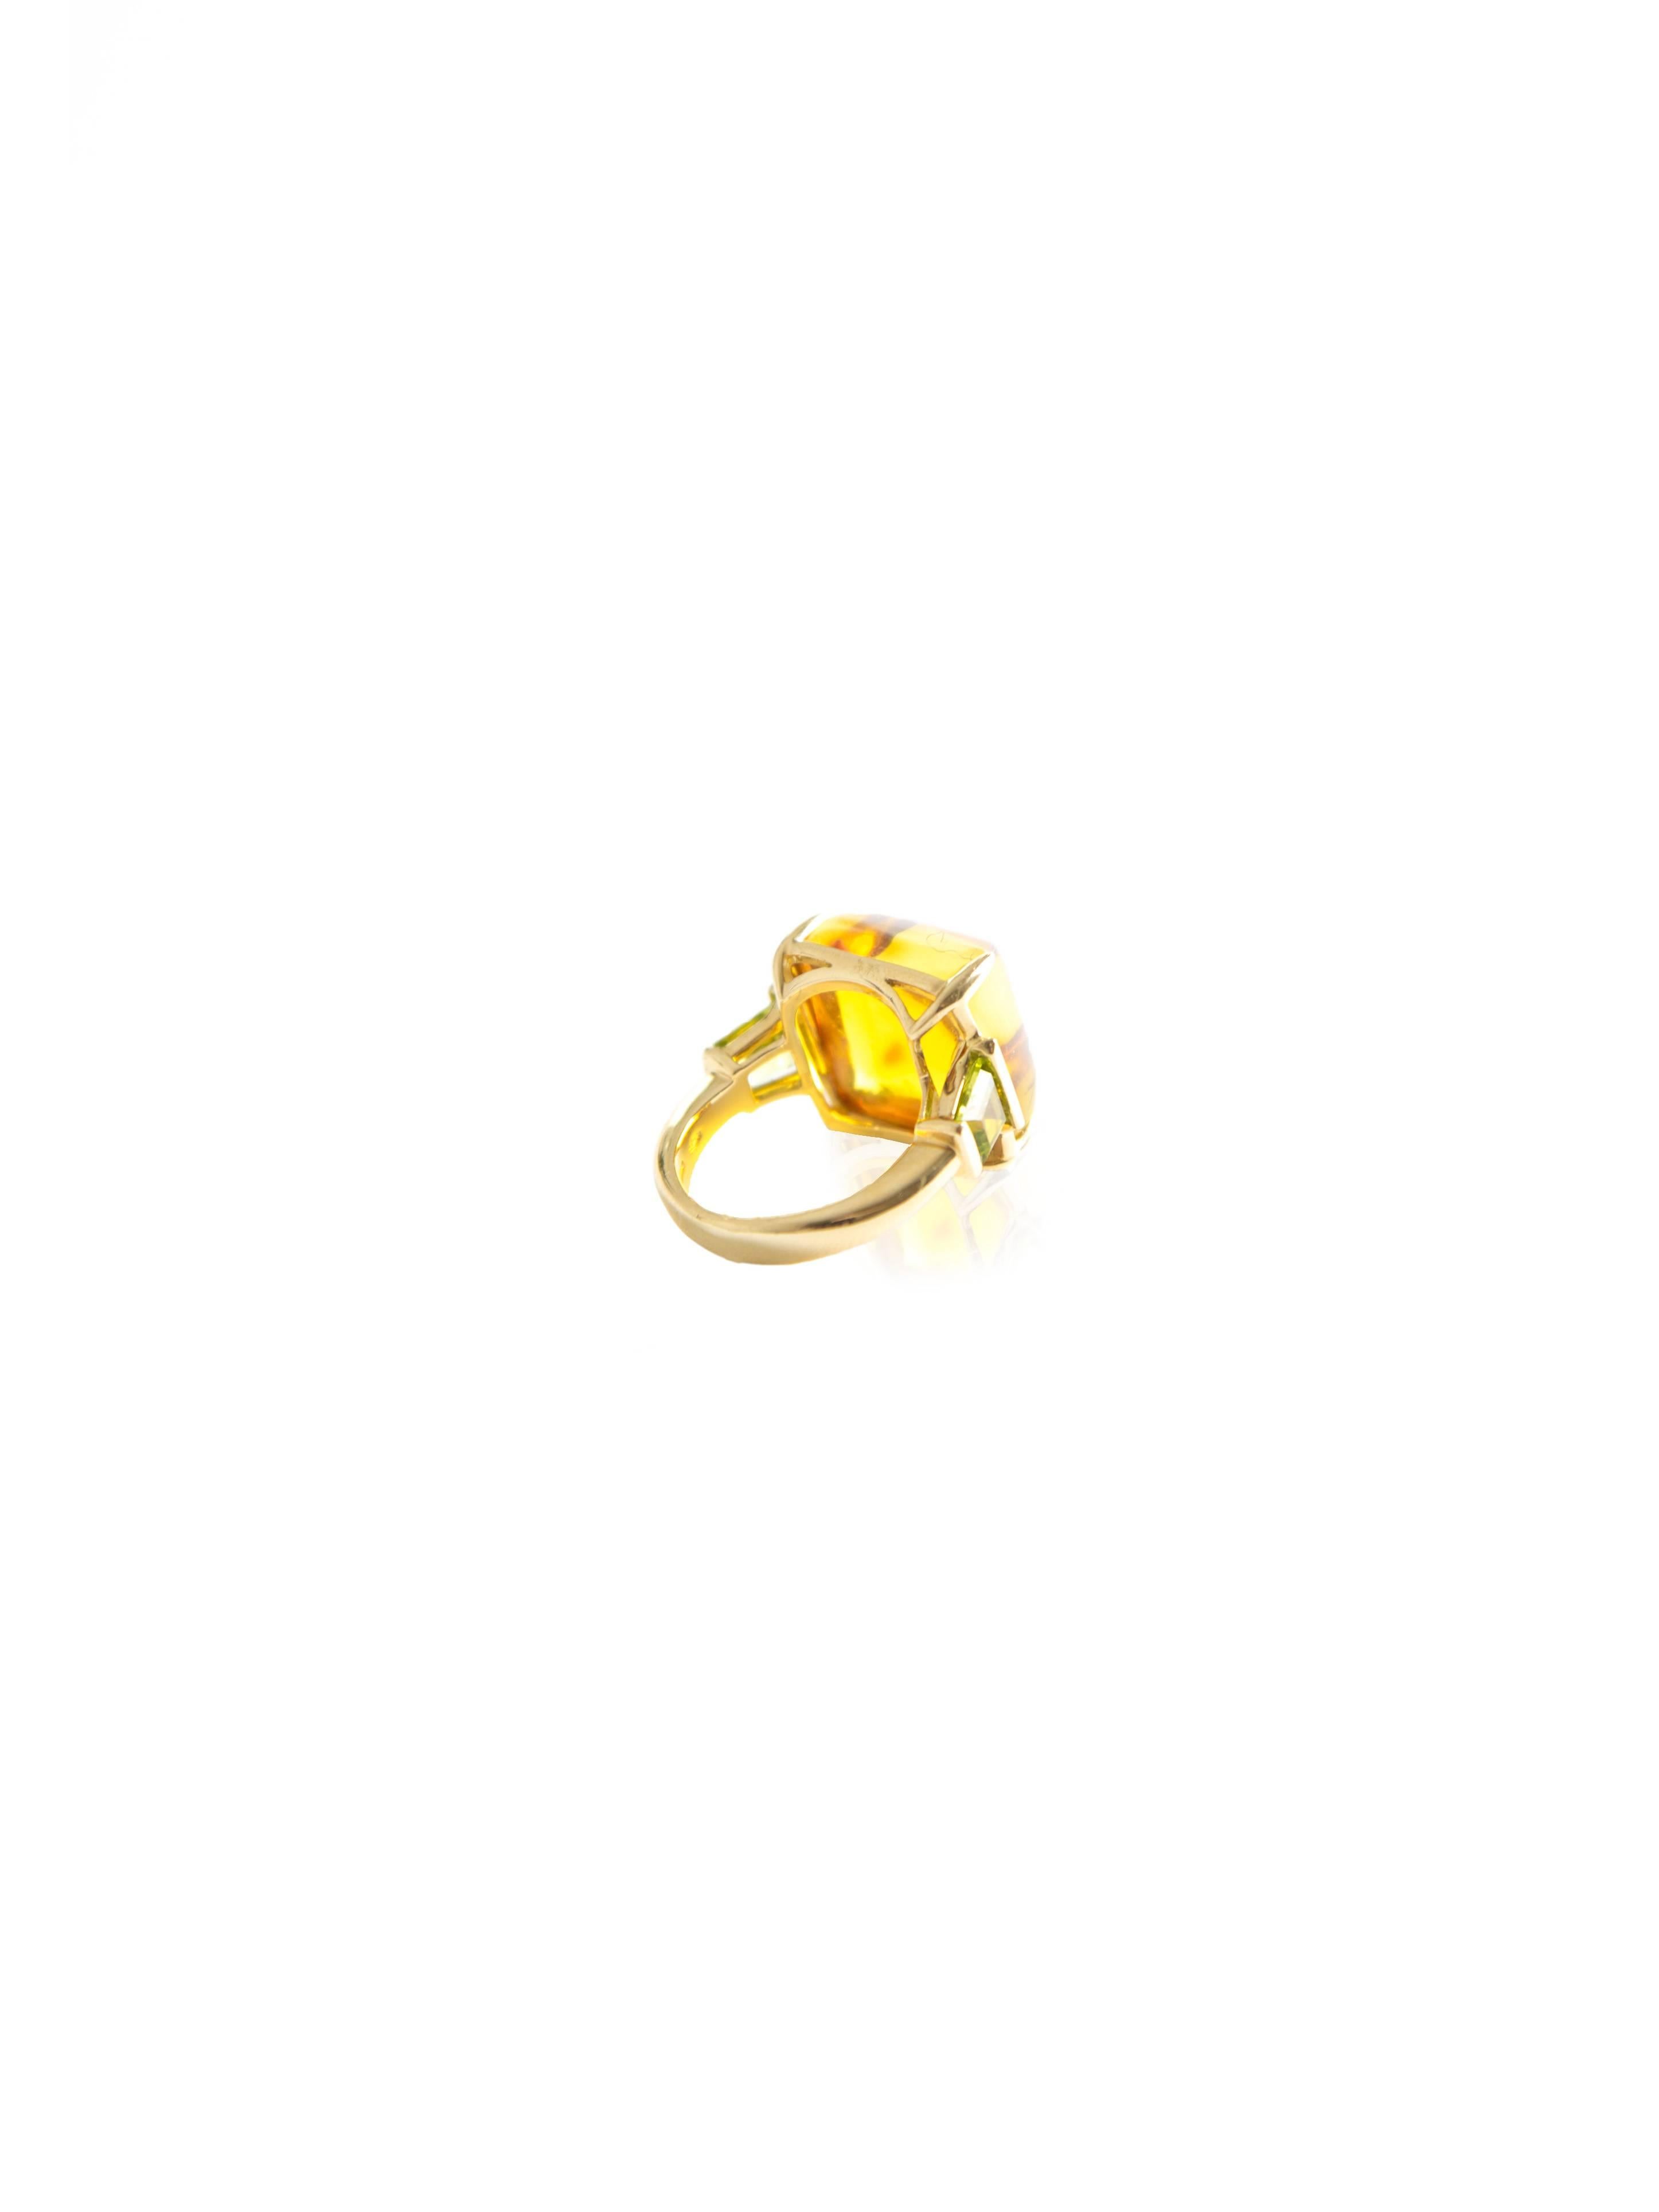 Women's or Men's Amber Peridot Yellow Gold Ring by Opera, Italian Attitude For Sale